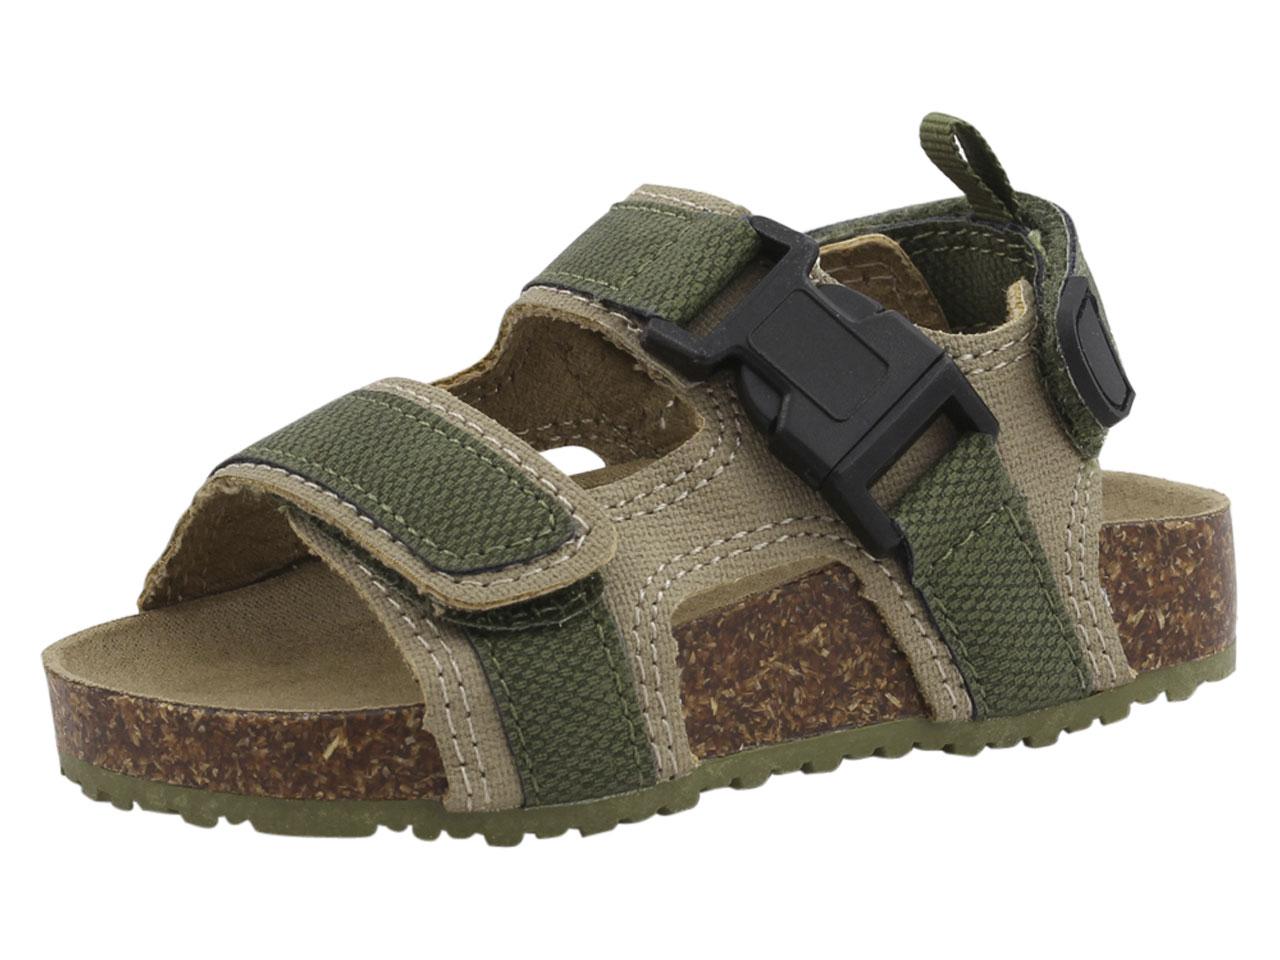 Toddler/Little Boy's Alburn Sandals Shoes